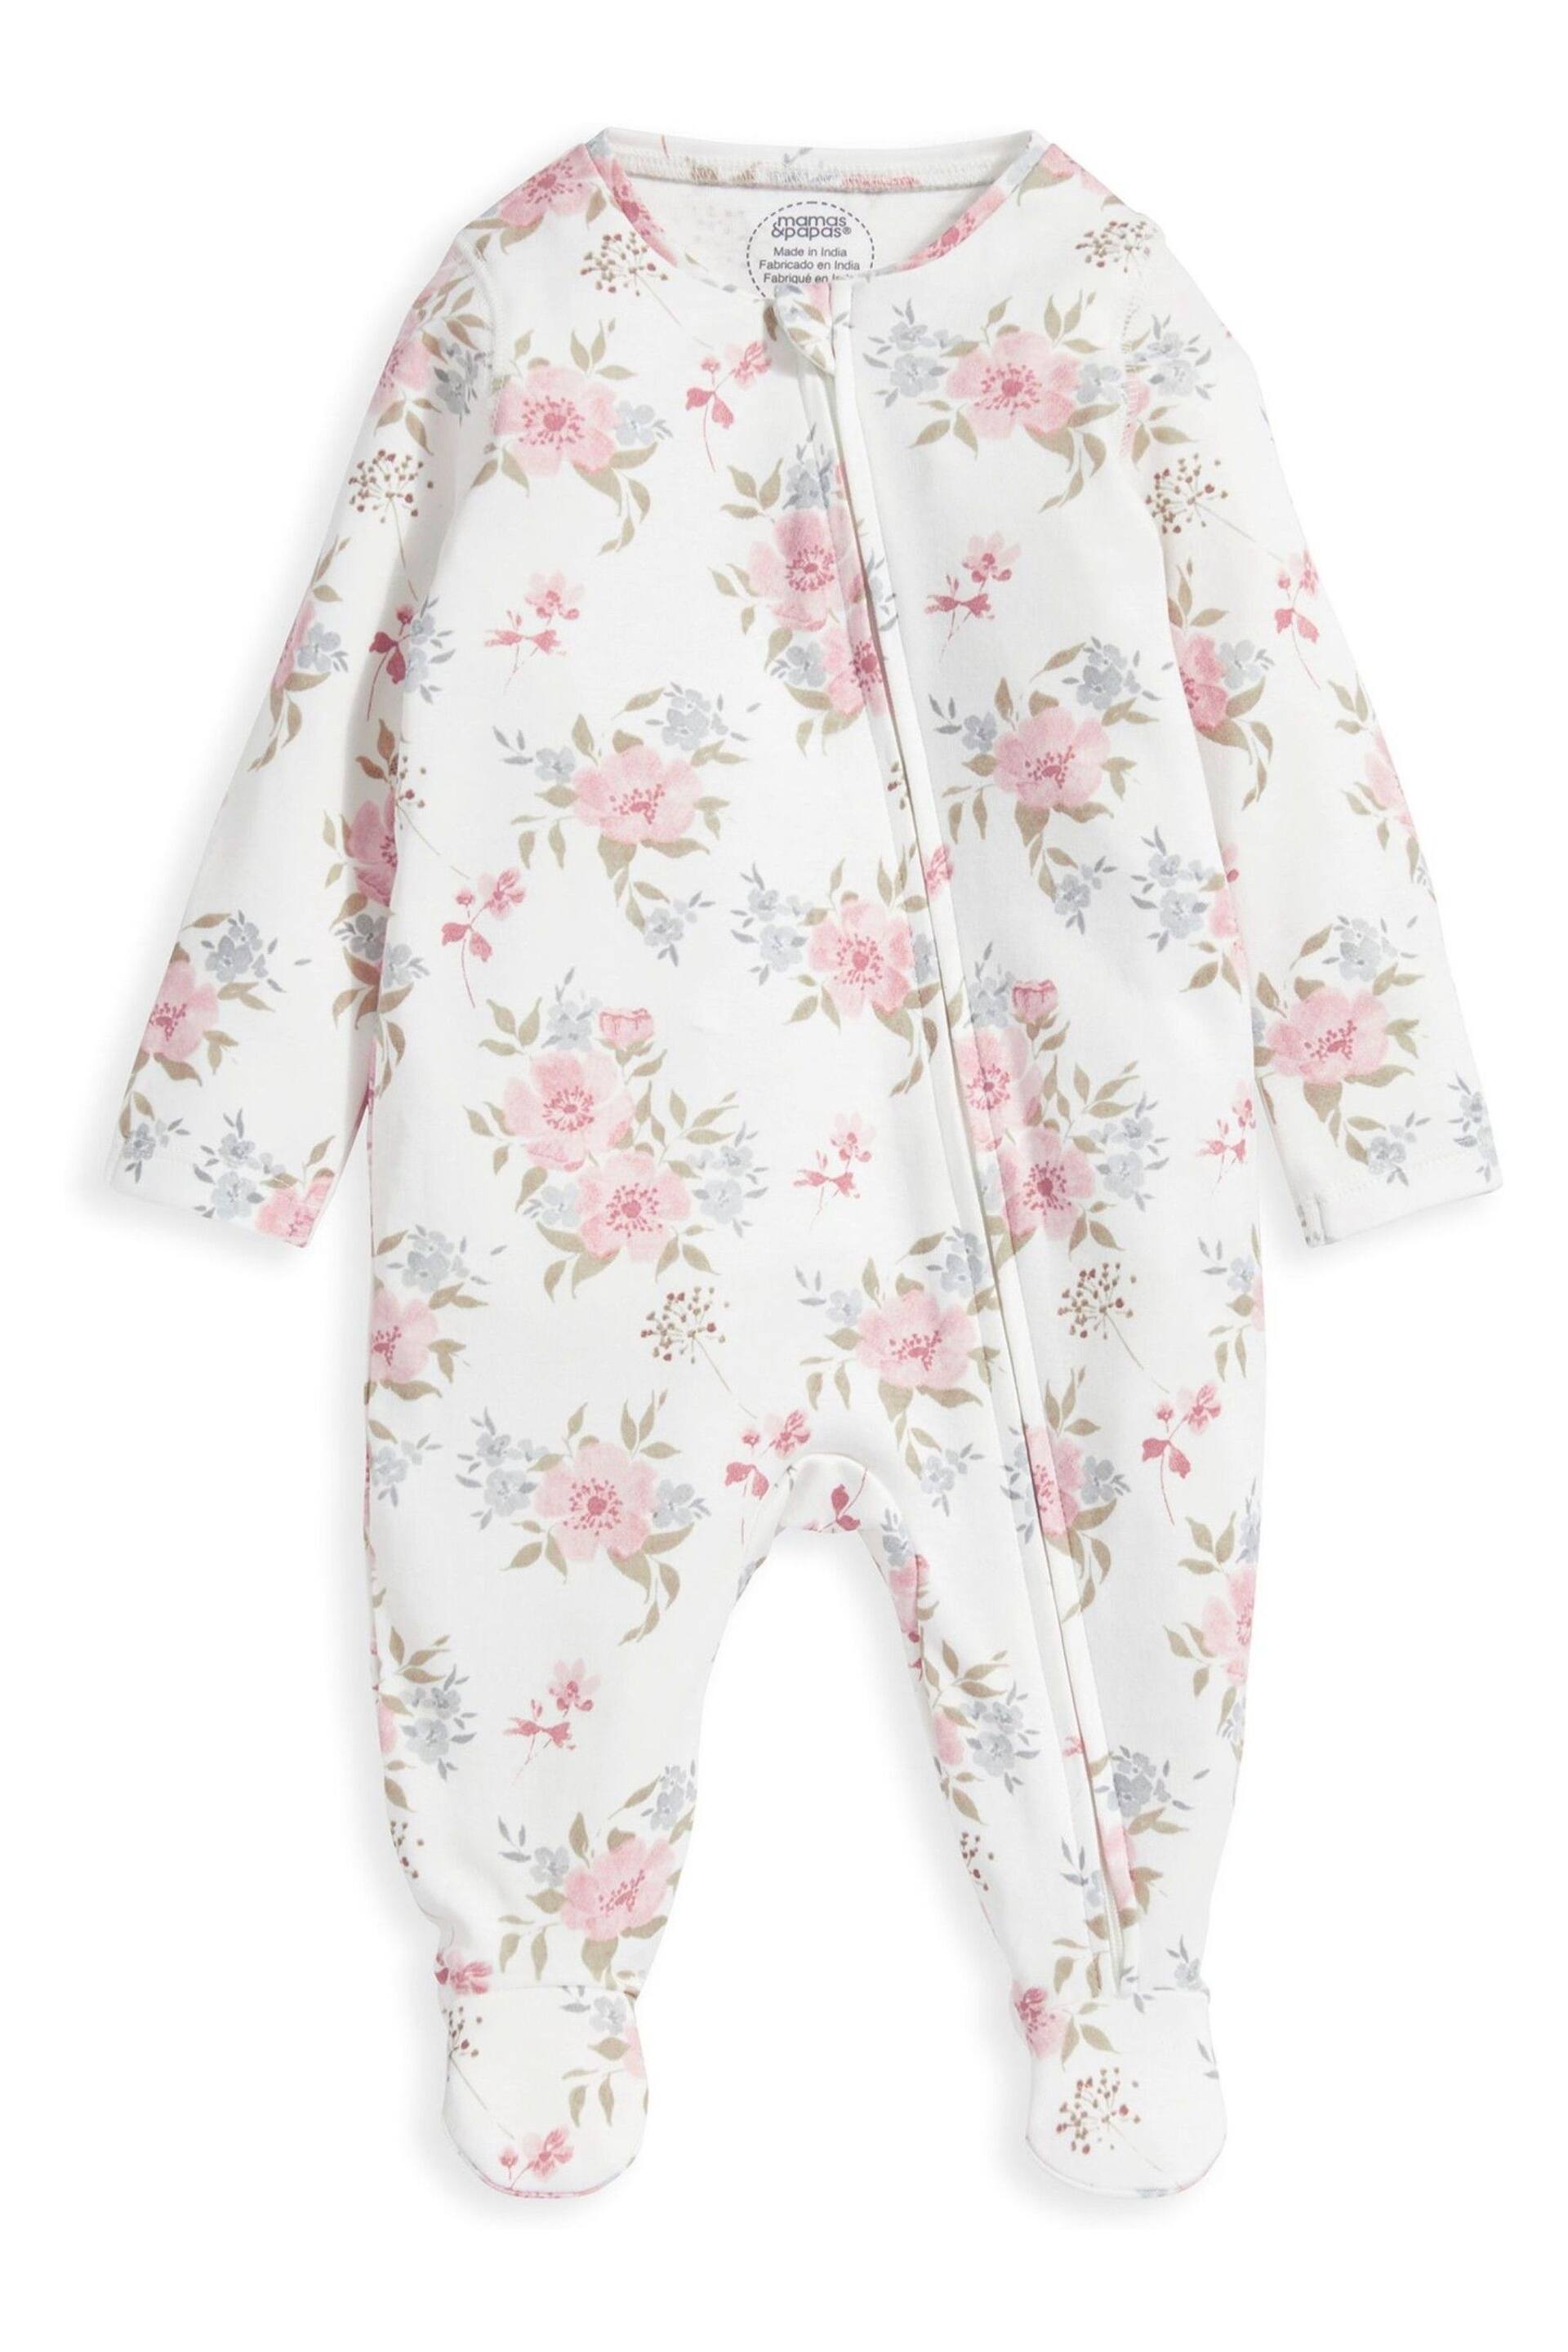 Mamas & Papas Pink Floral Print Sleepsuit - Image 2 of 3